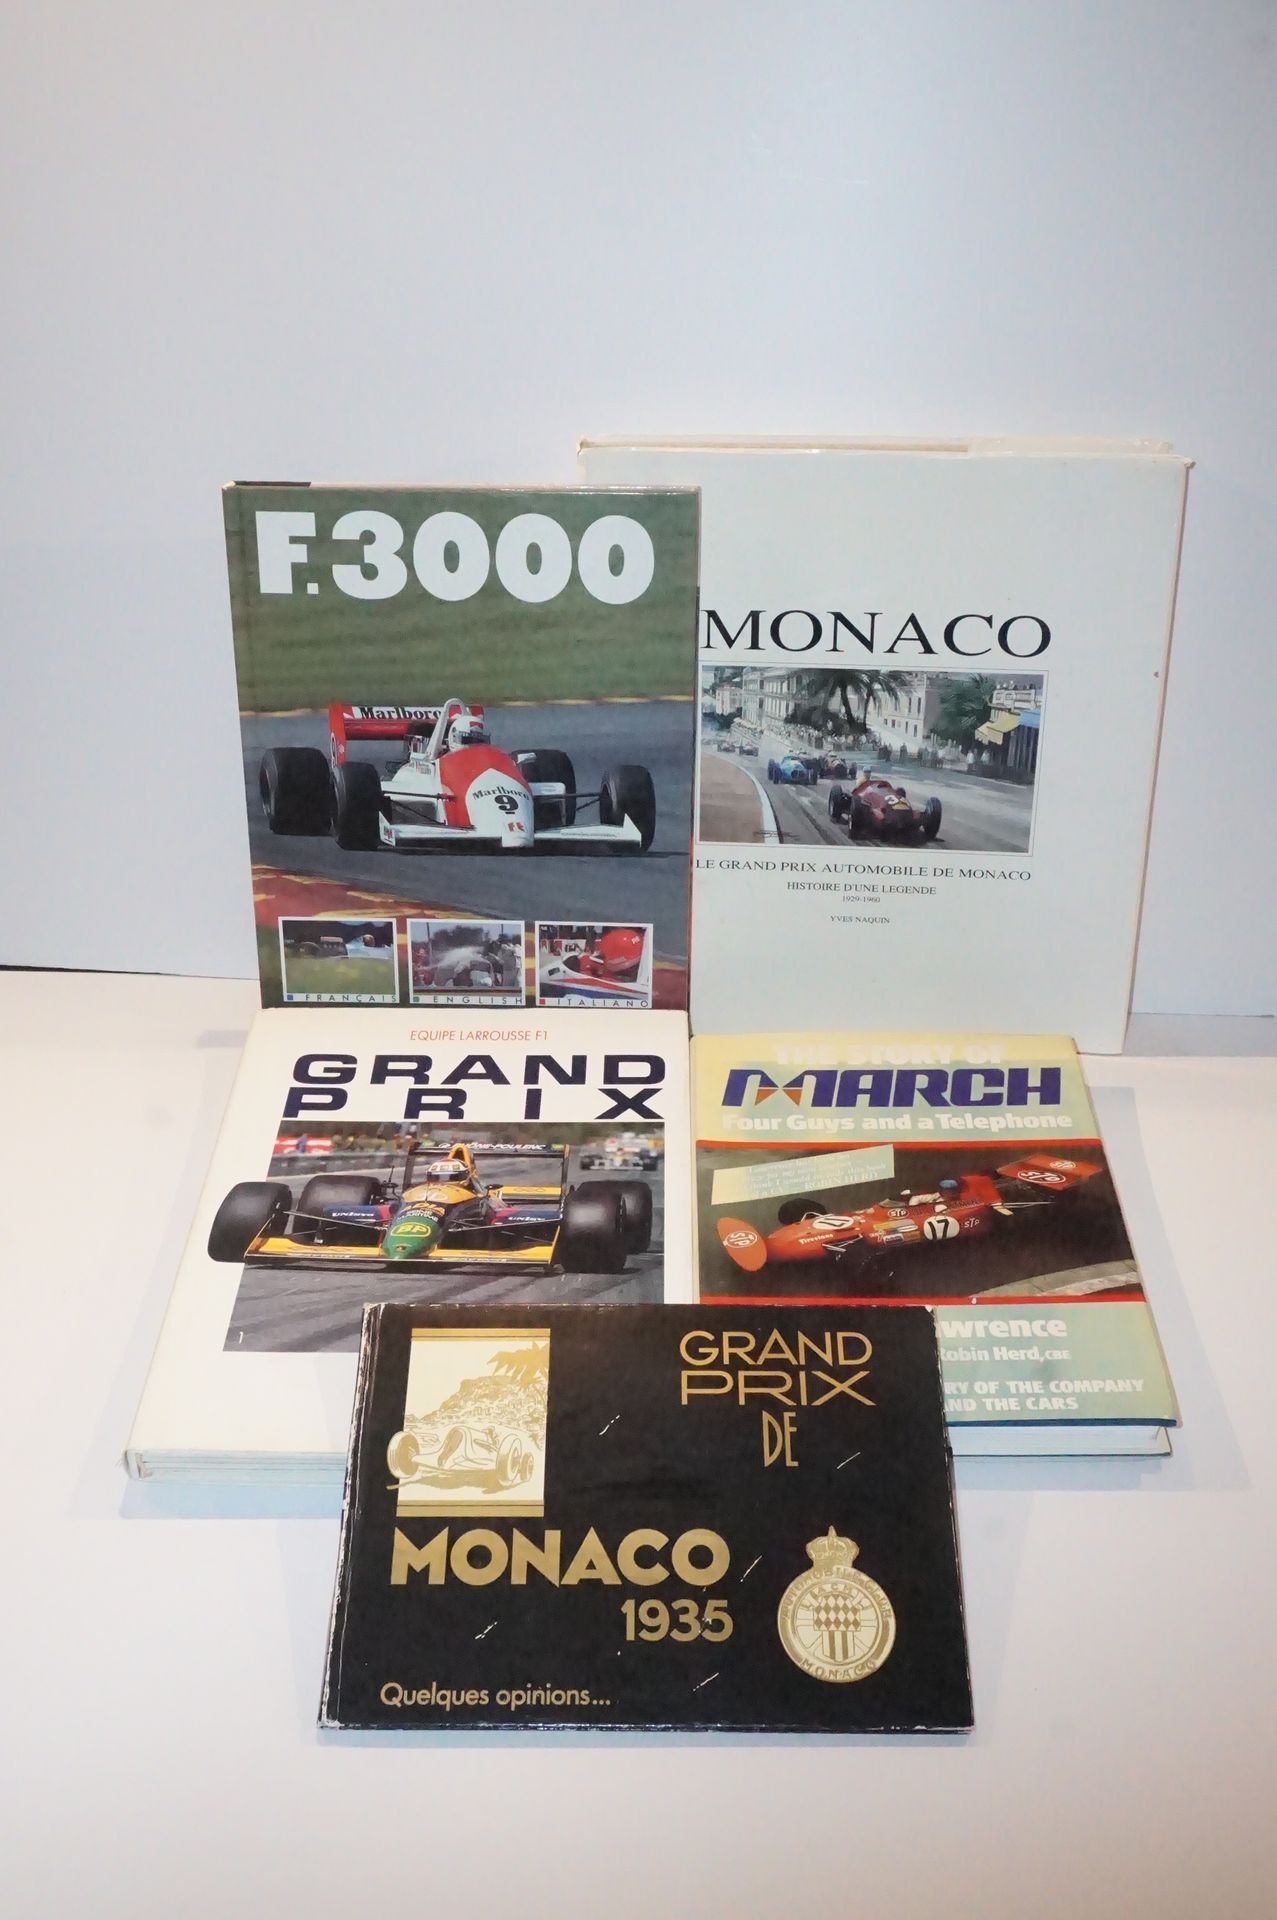 Null 一套4本书和一份传单。
- 三月的故事
- 摩纳哥
- 摩纳哥大奖赛宣传单 1935年
- 大奖赛
- F 3000